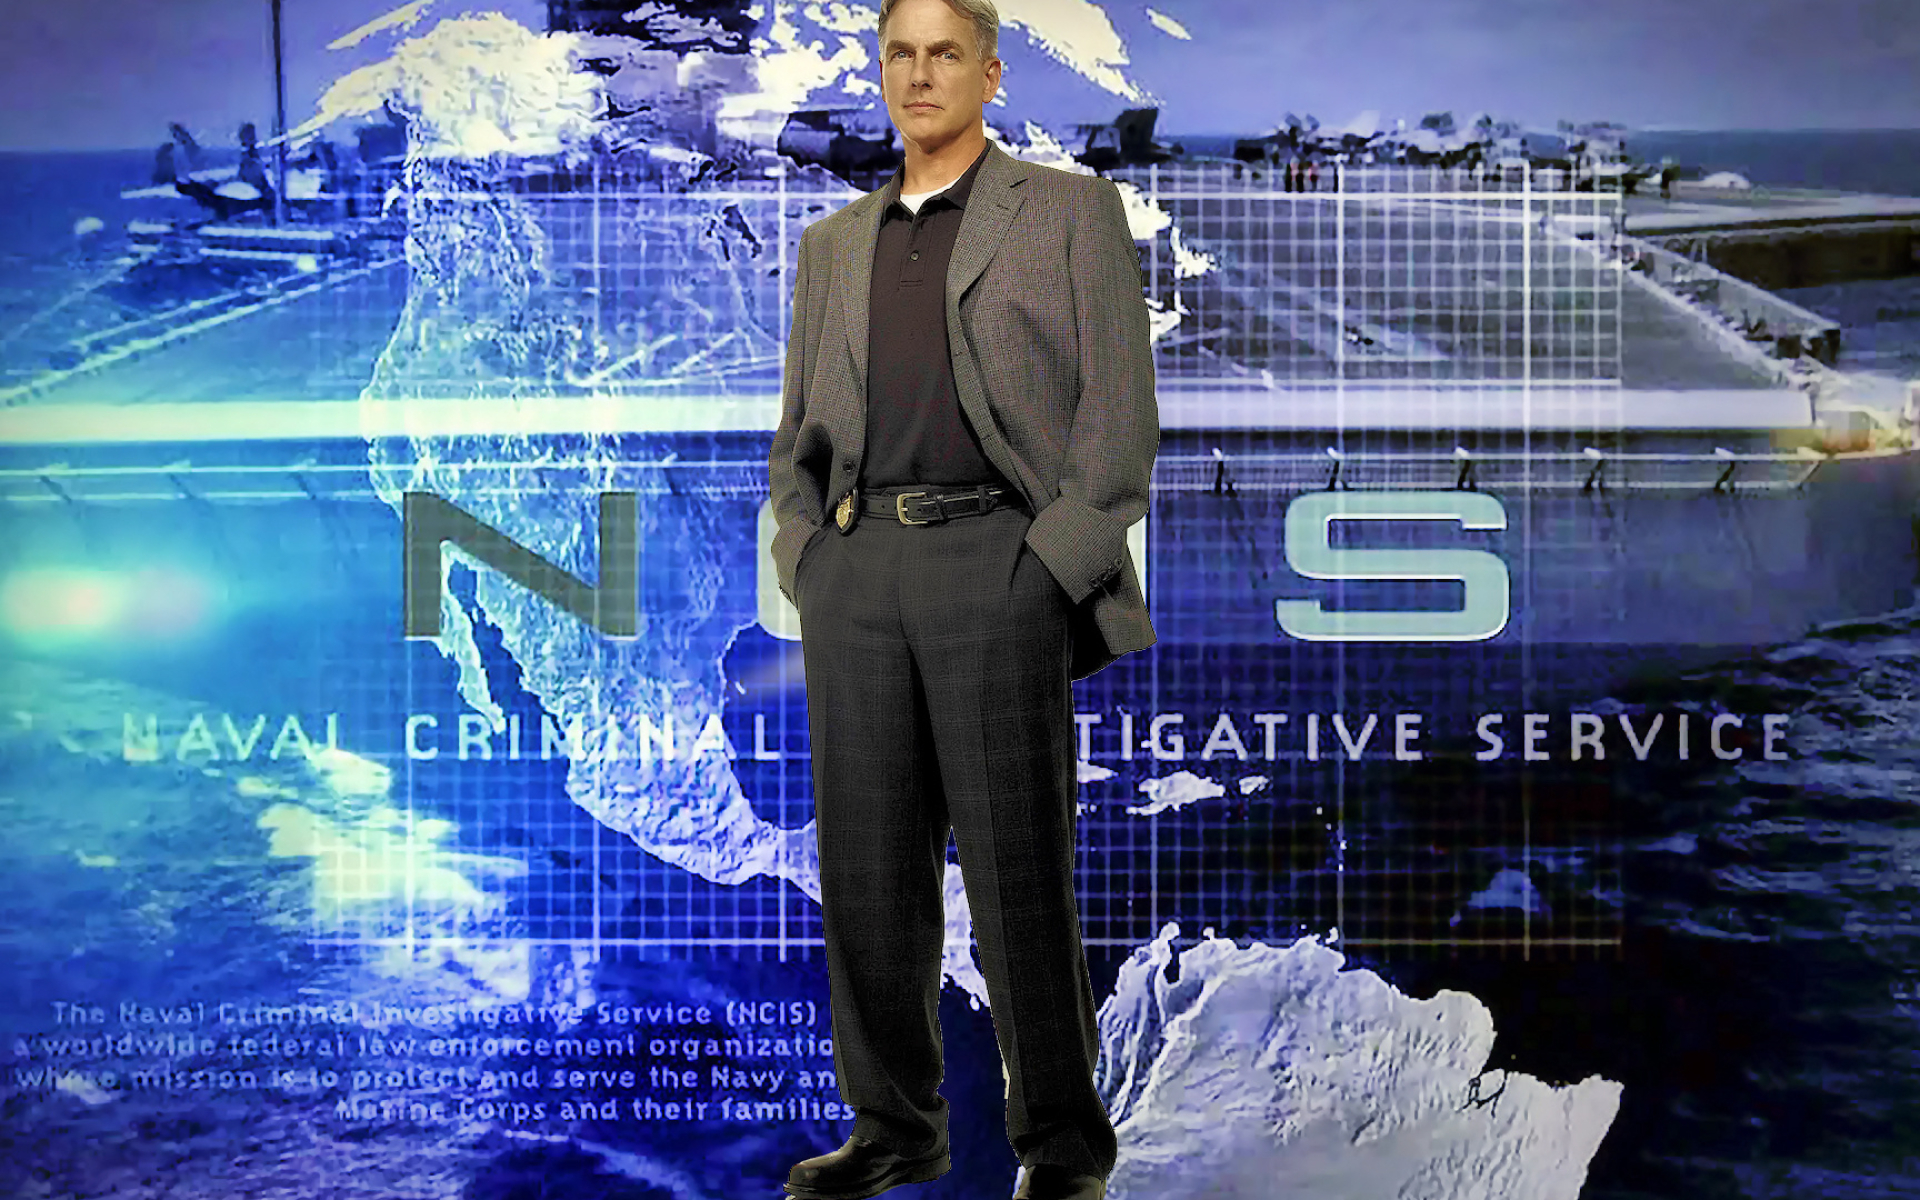 NCIS: Naval Criminal Investigative Service: Mark Harmon, NCIS' Special Agent Leroy Jethro Gibbs, A skilled investigator. 1920x1200 HD Wallpaper.